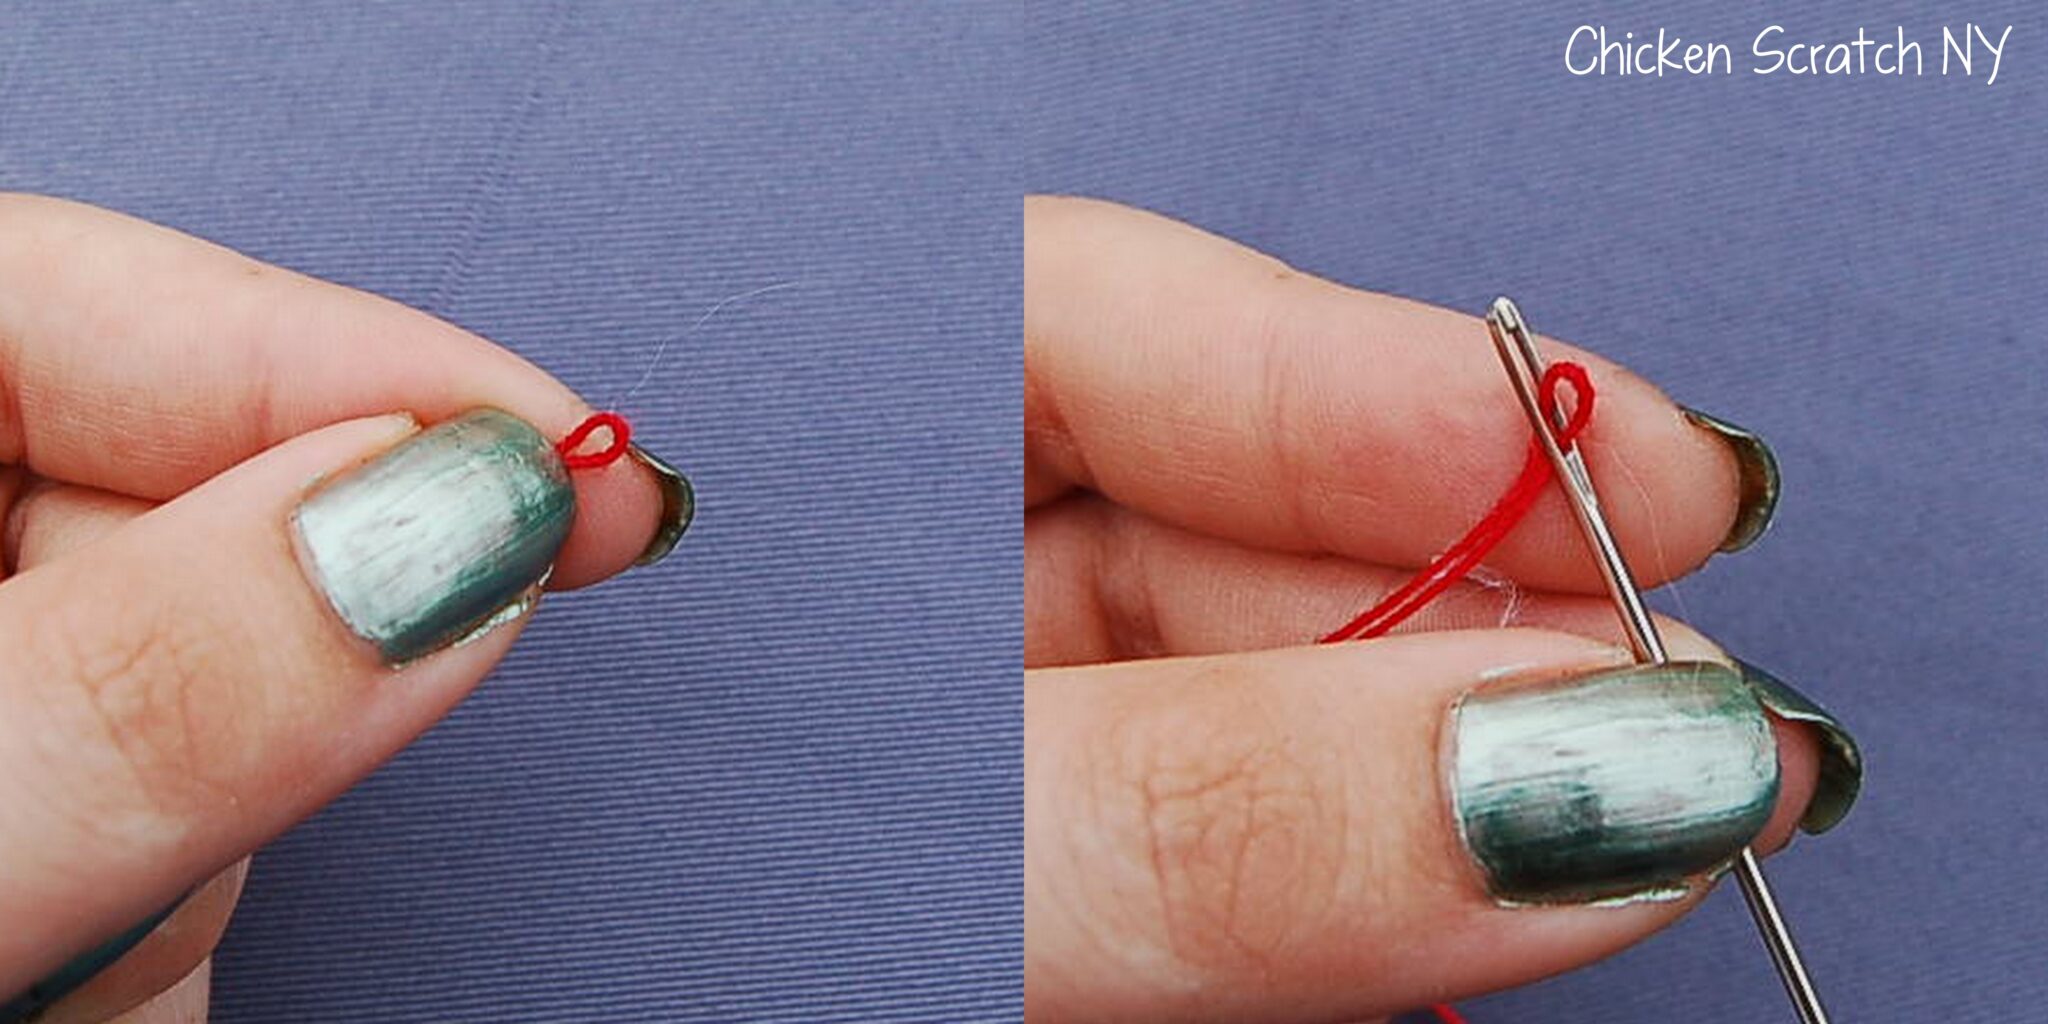 Matching thread to needle ? : r/sewhelp